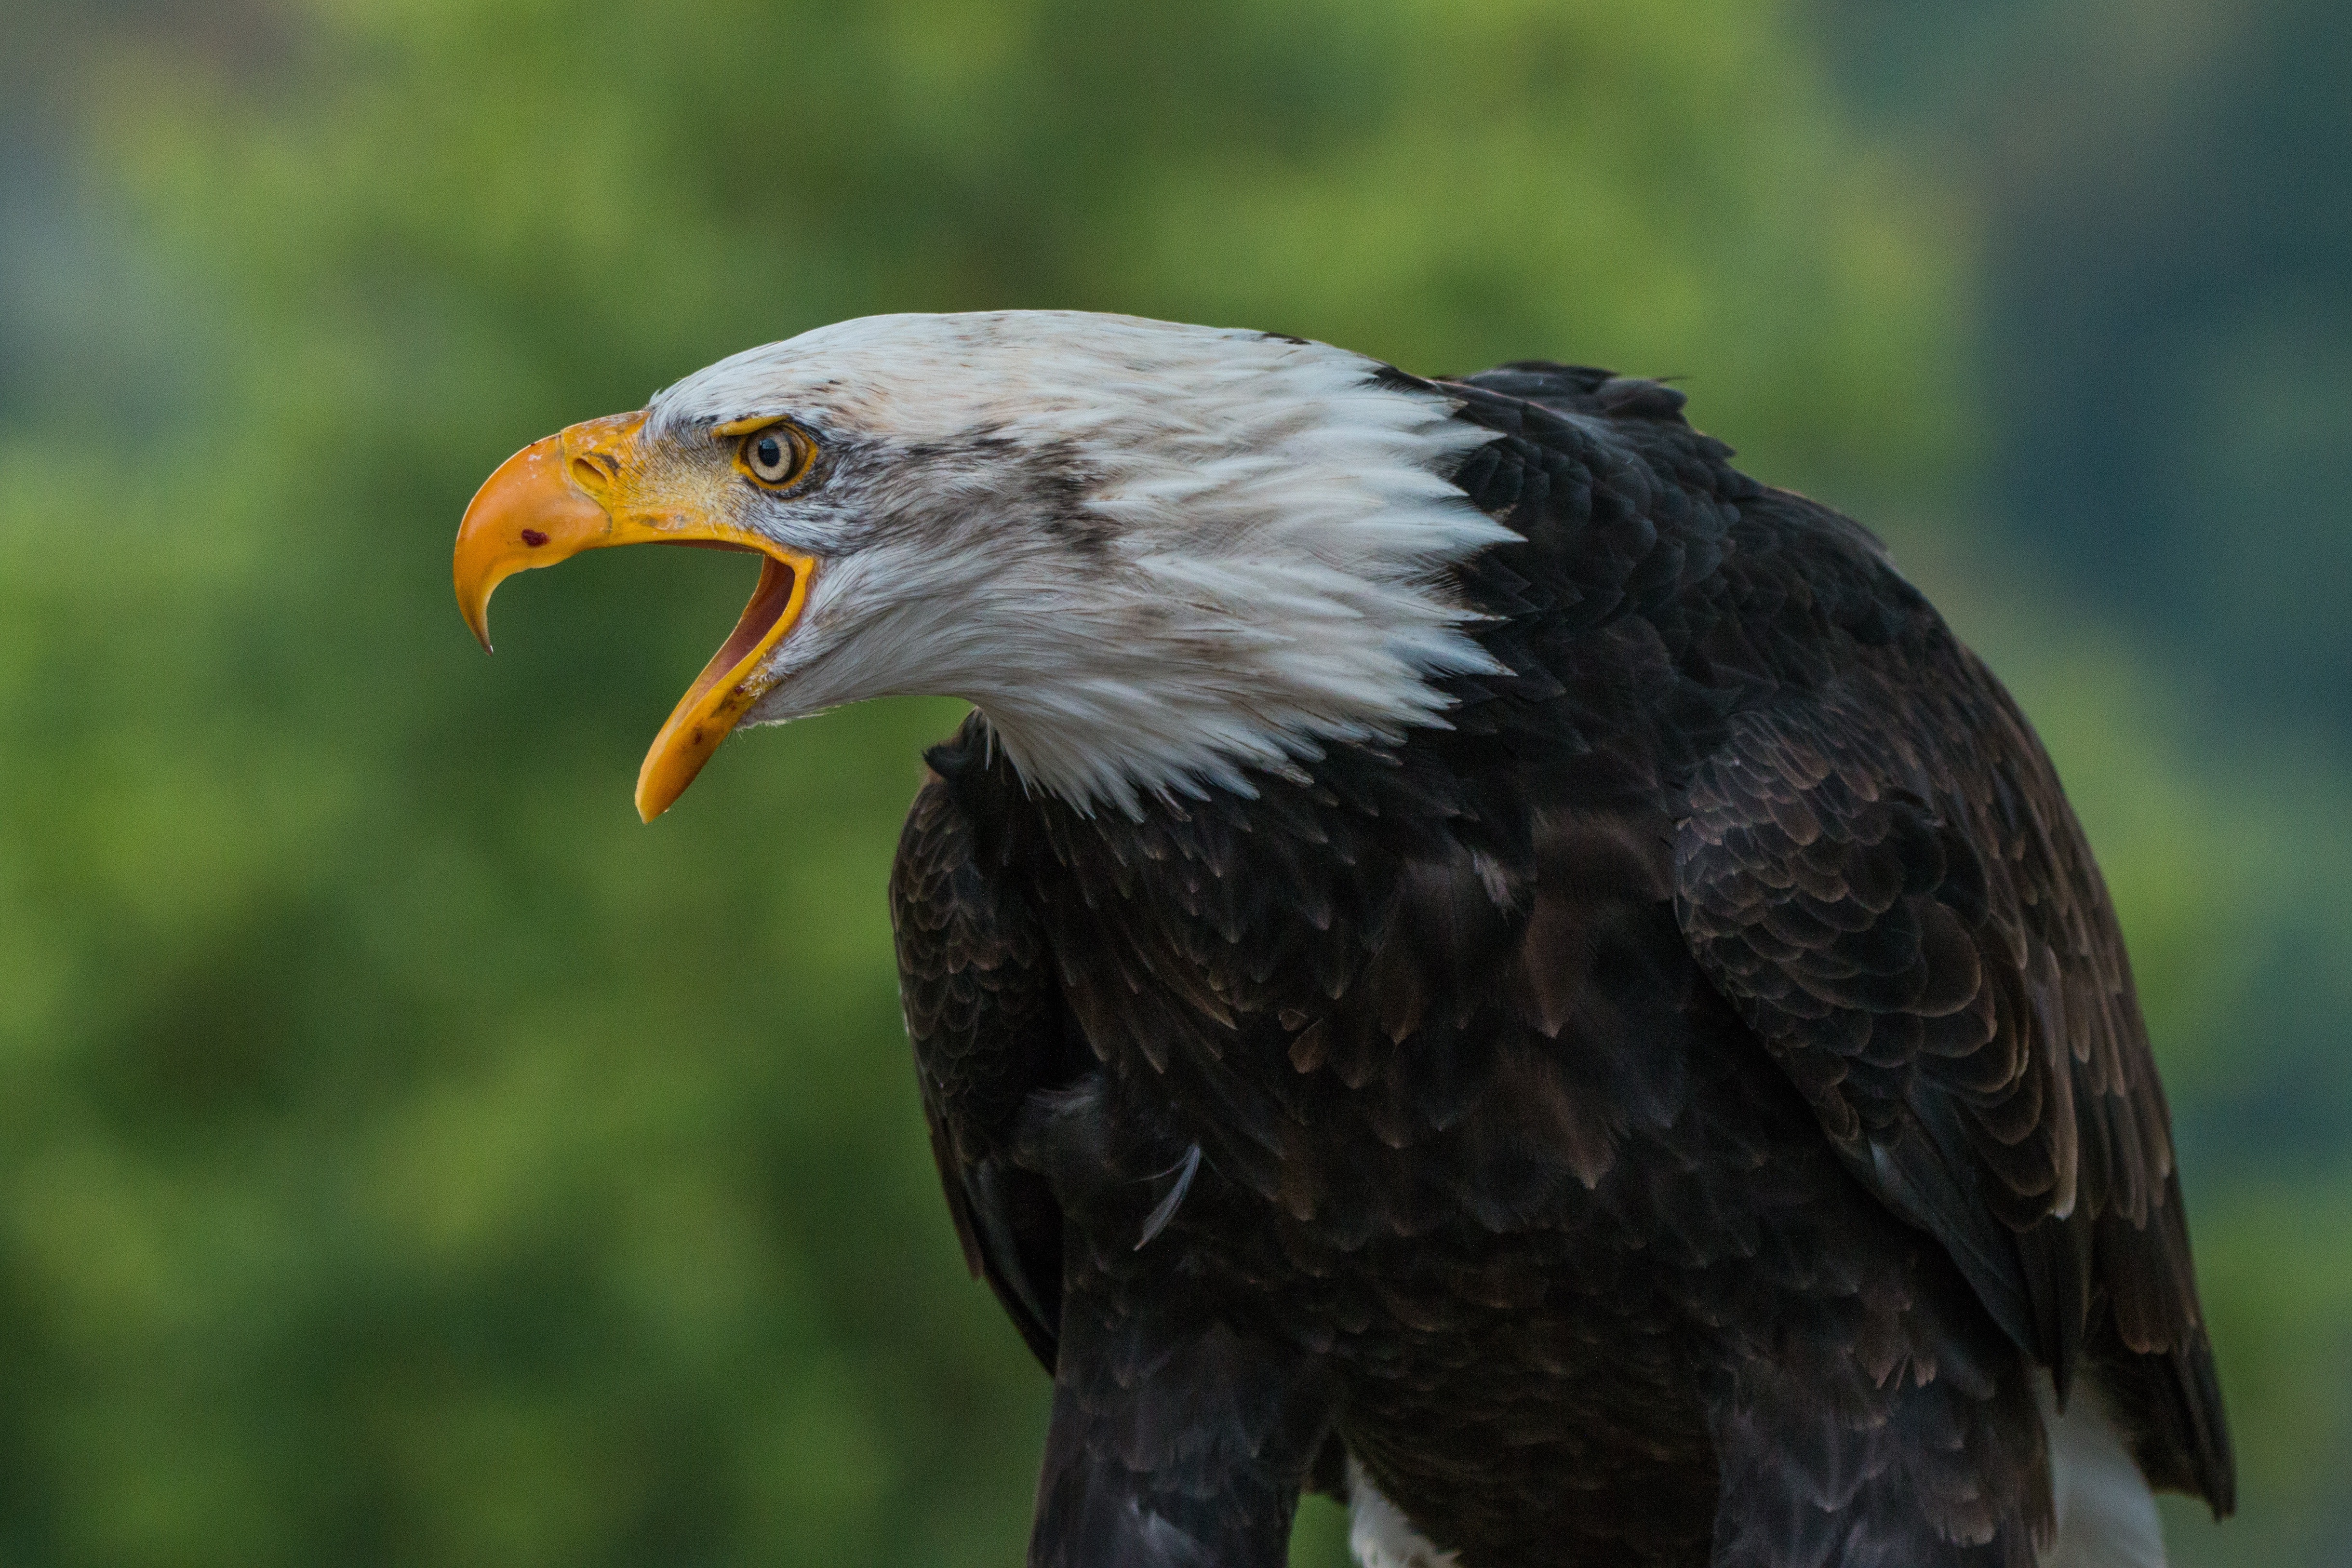 Free stock photos of bald eagle · Pexels